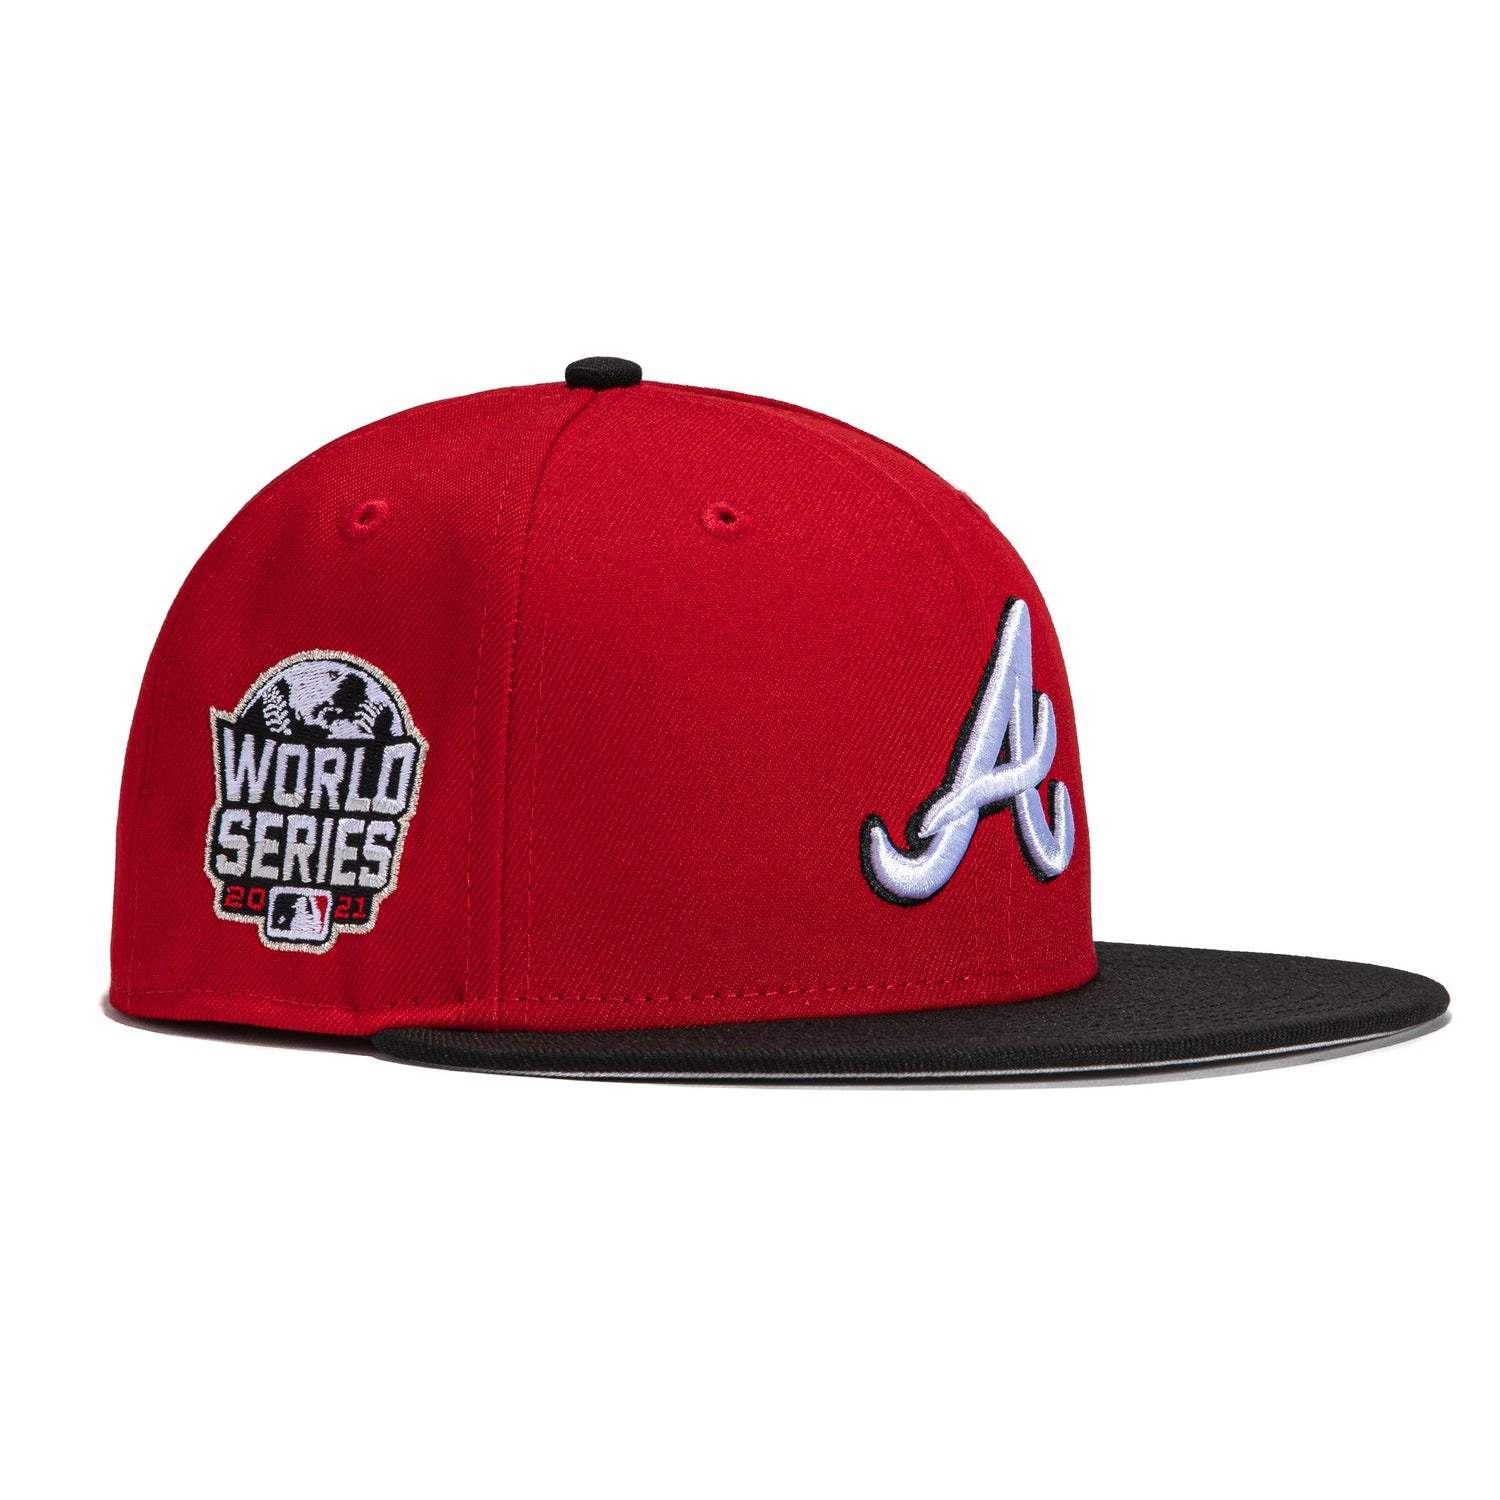 New Era 59FIFTY Atlanta Braves 2021 World Series Patch Hat - Red, Black Red/Black / 7 3/8